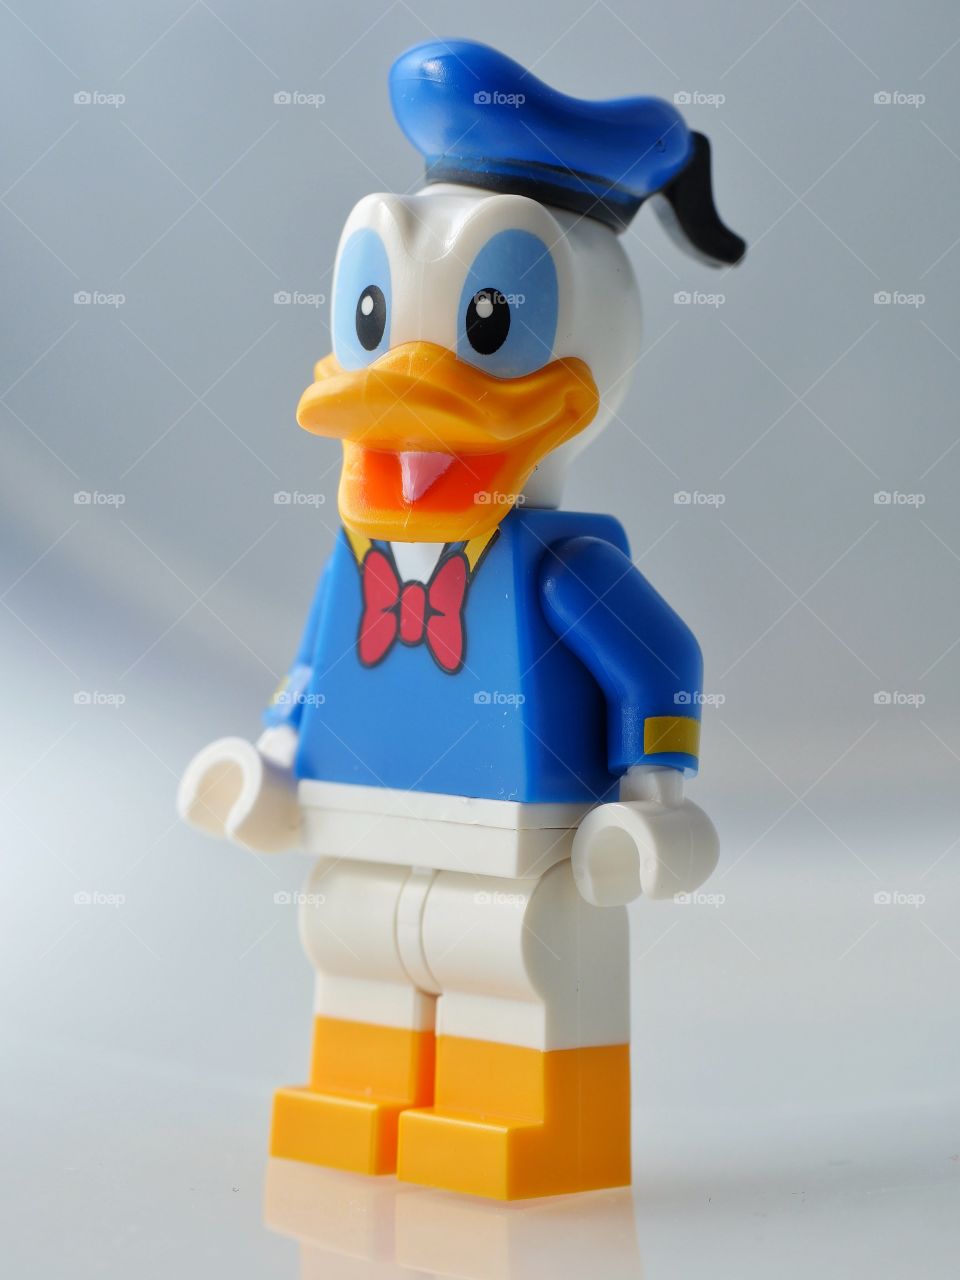 Lego Donald Duck minifigure